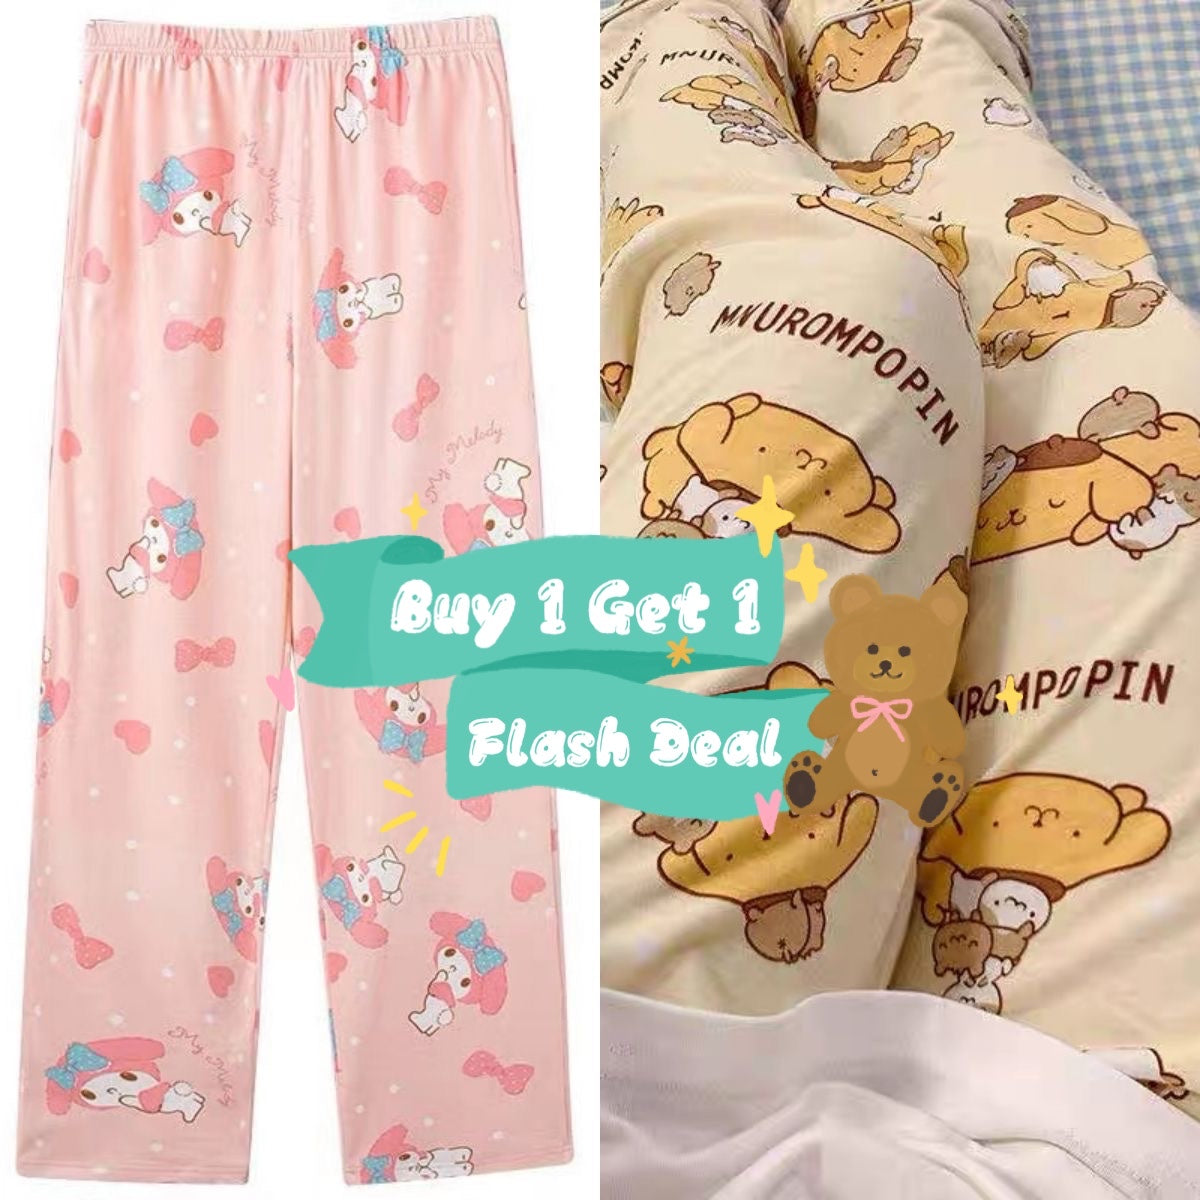 Buy 1 Get 1 Flash Deal Sanrio Sleepwear